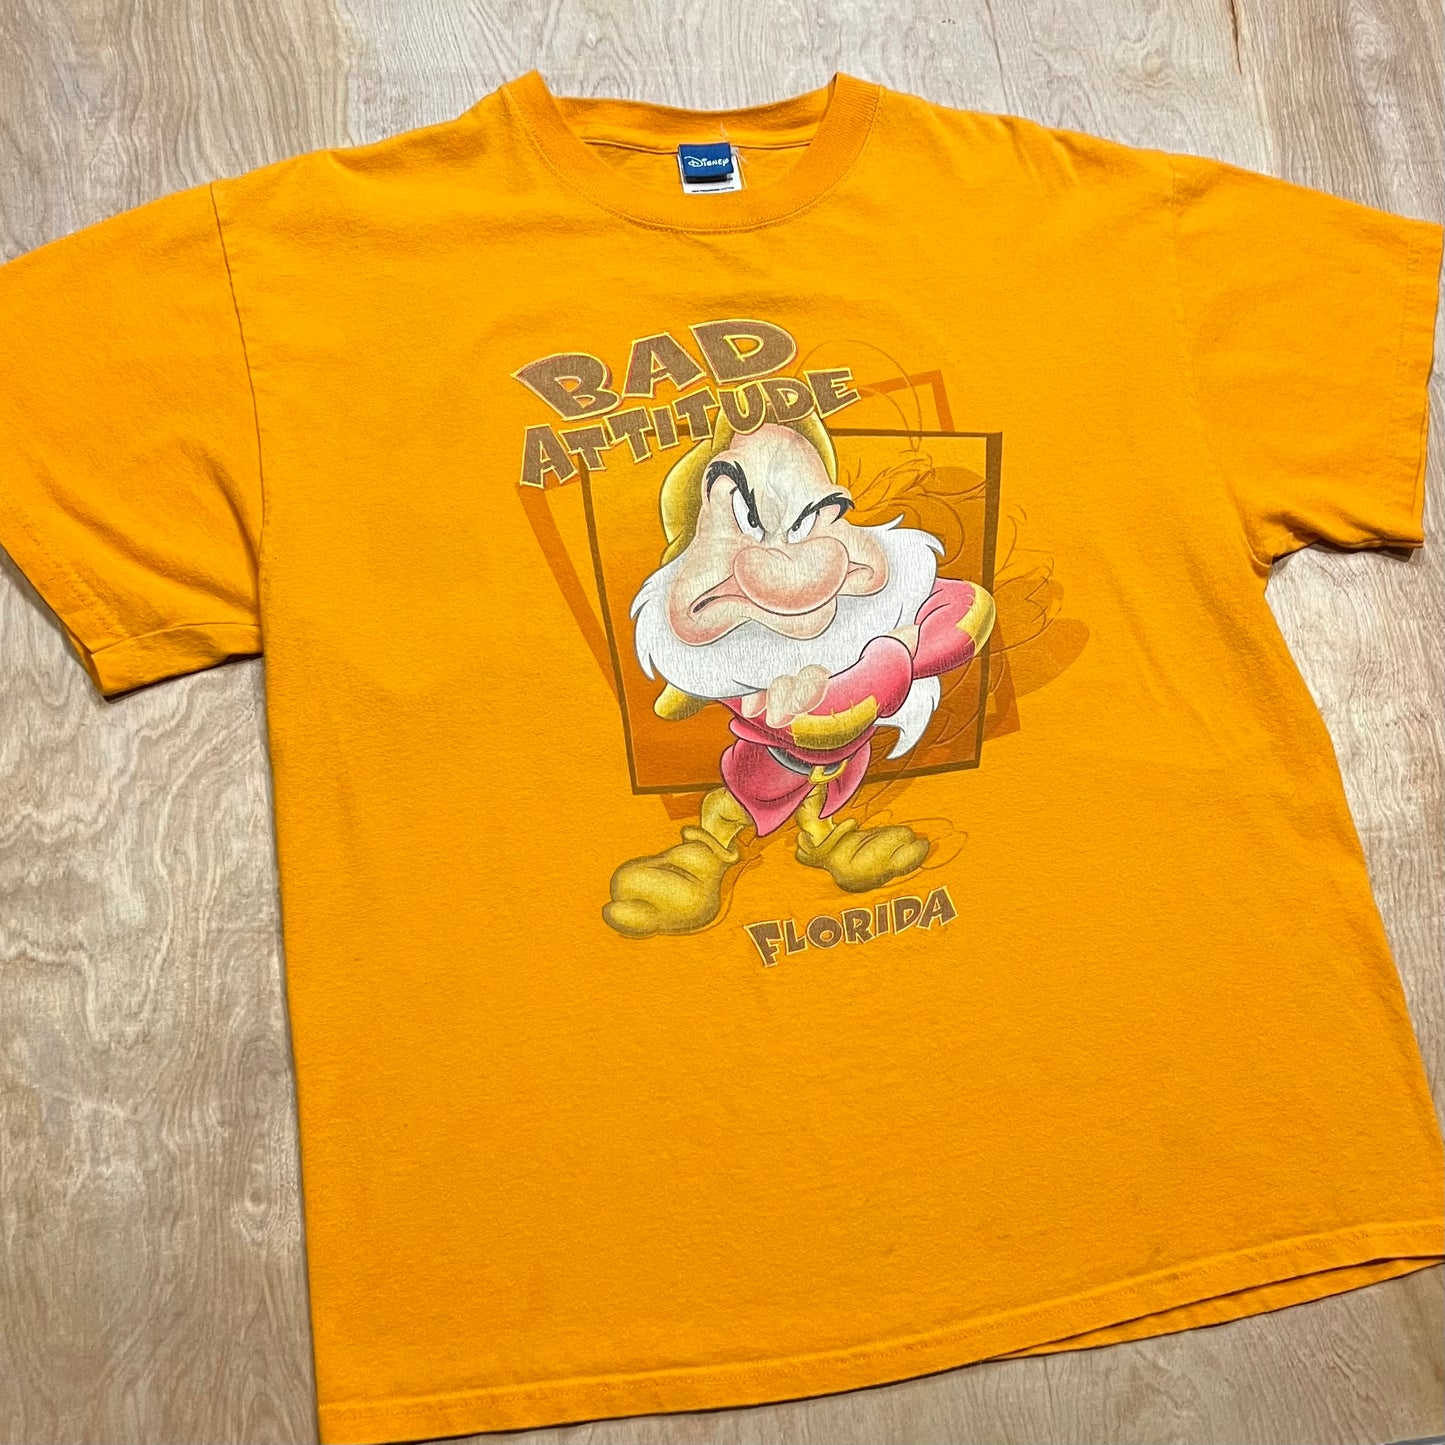 Vintage Disney "Bad Attitude" Florida T-Shirt